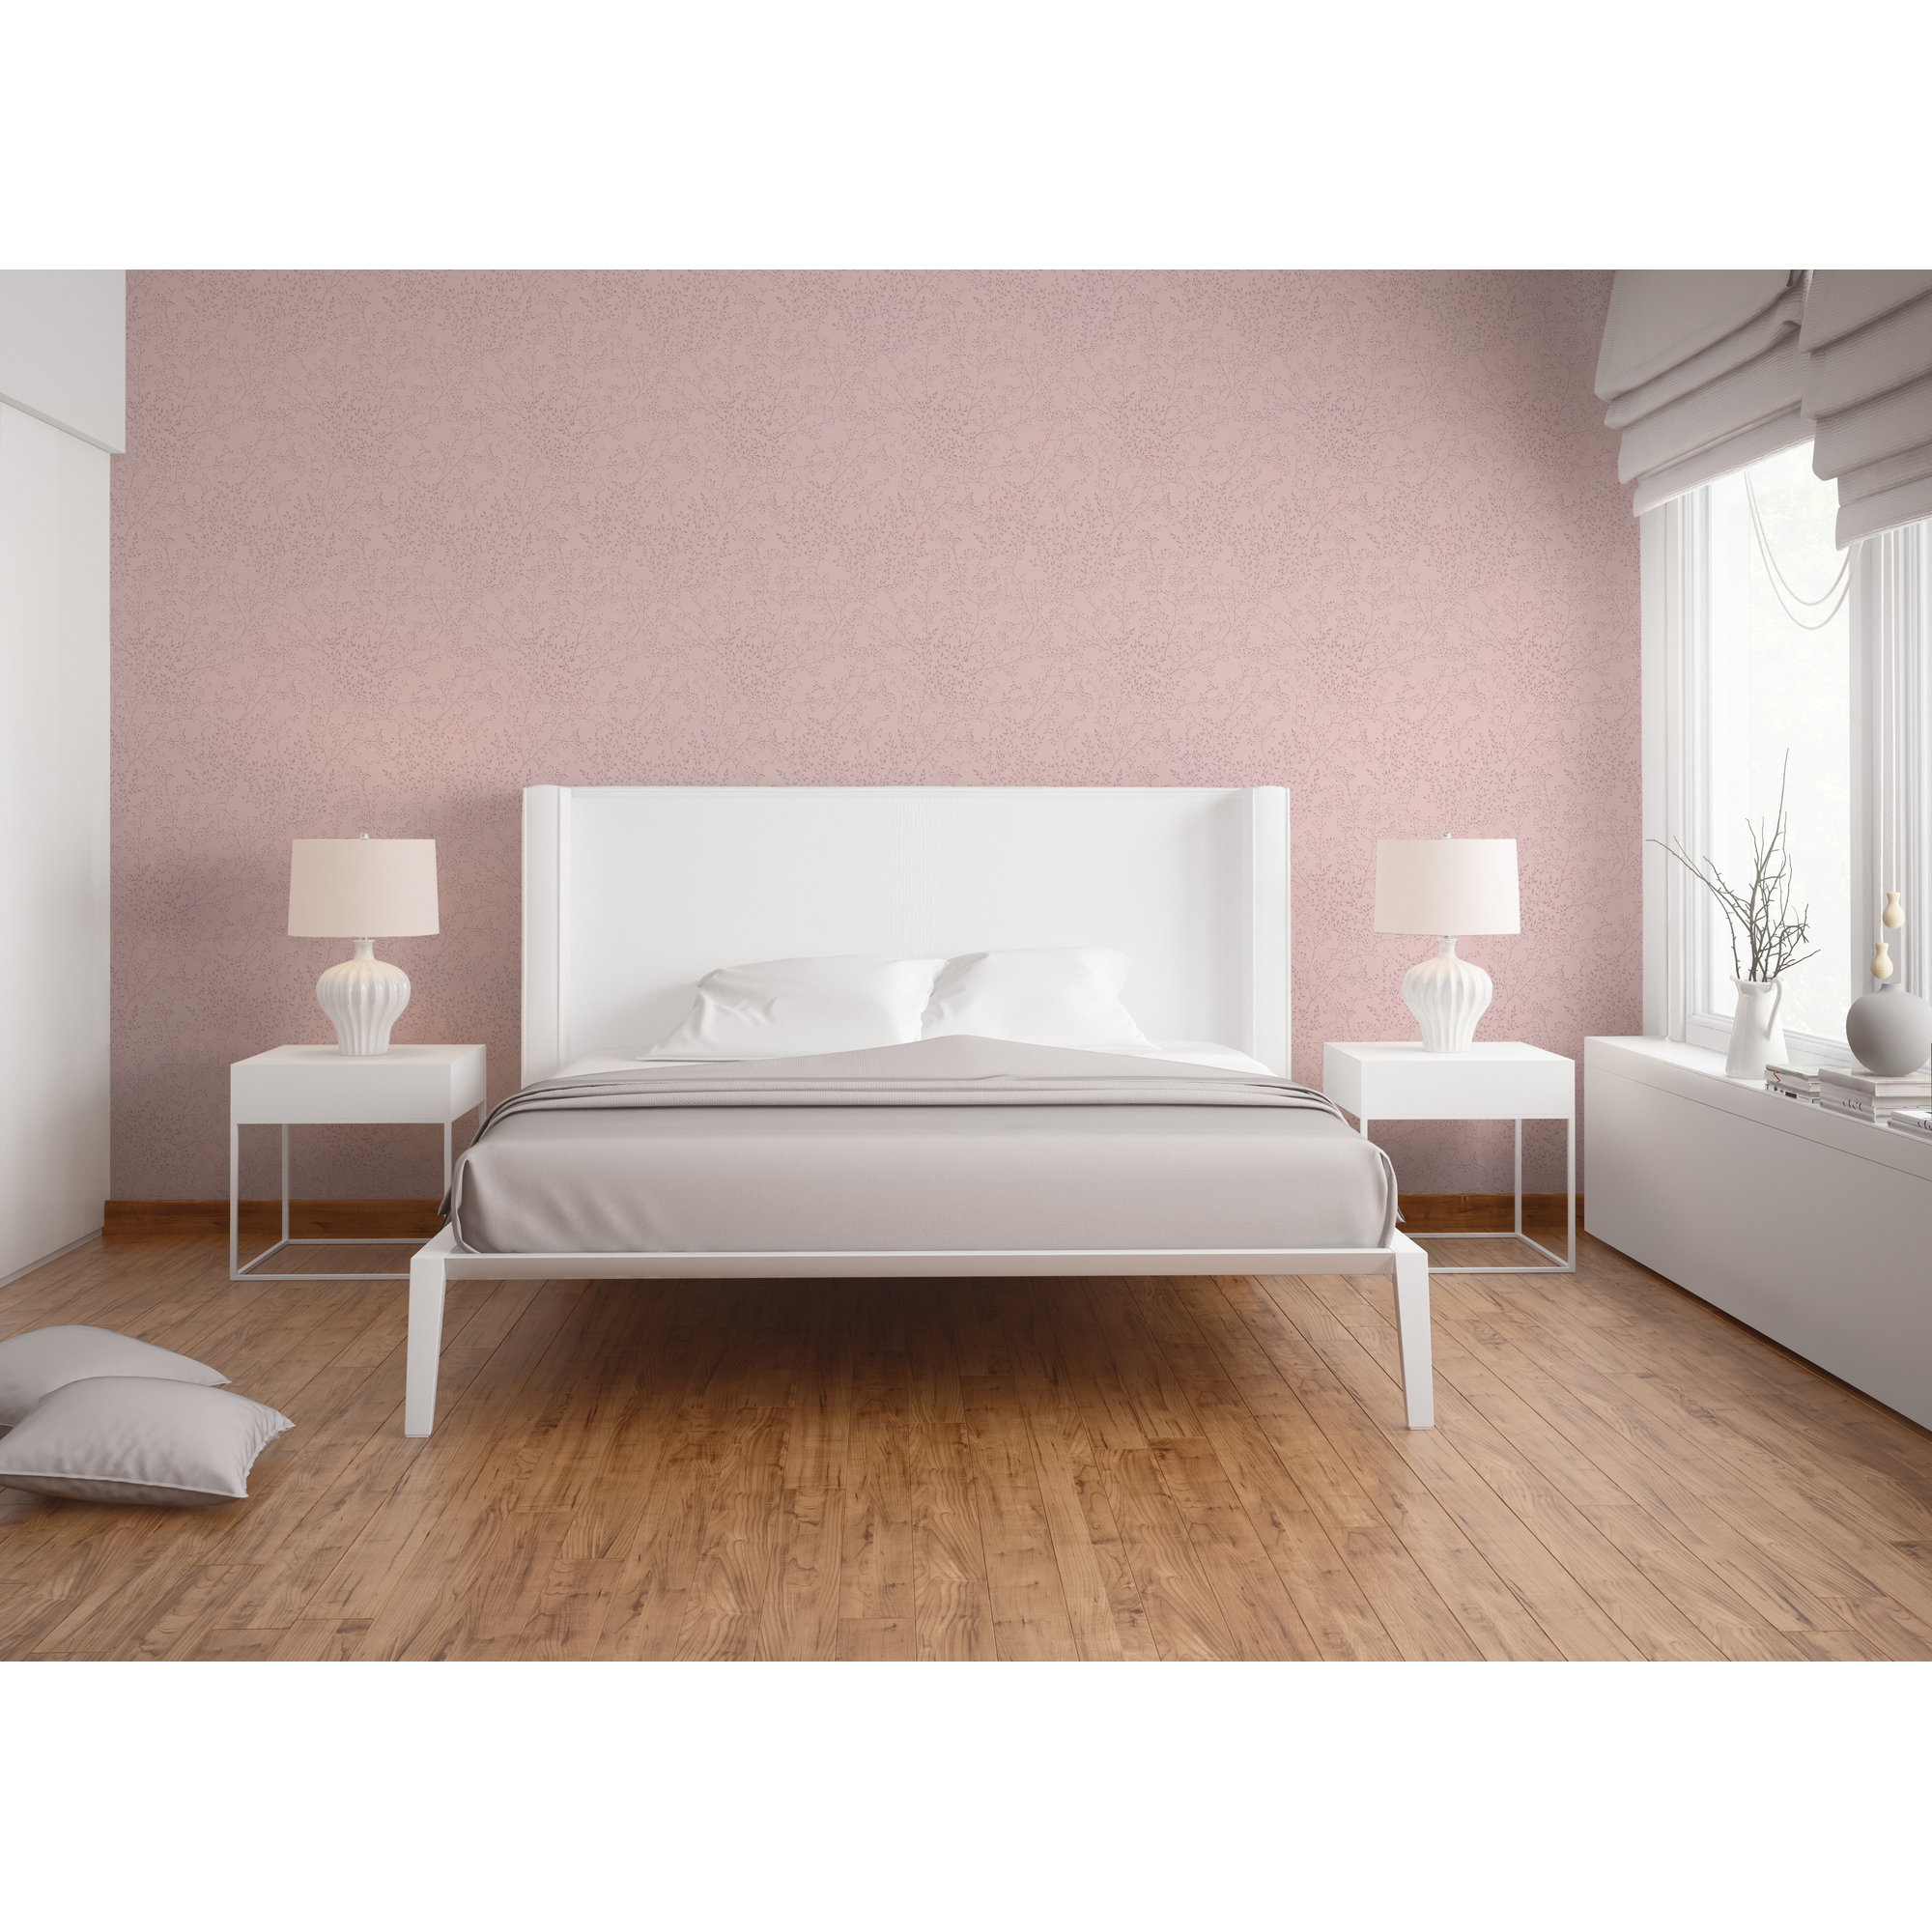 Vliestapete 'Trendwall 2' Floral rosa  53 x 1005 cm + product picture